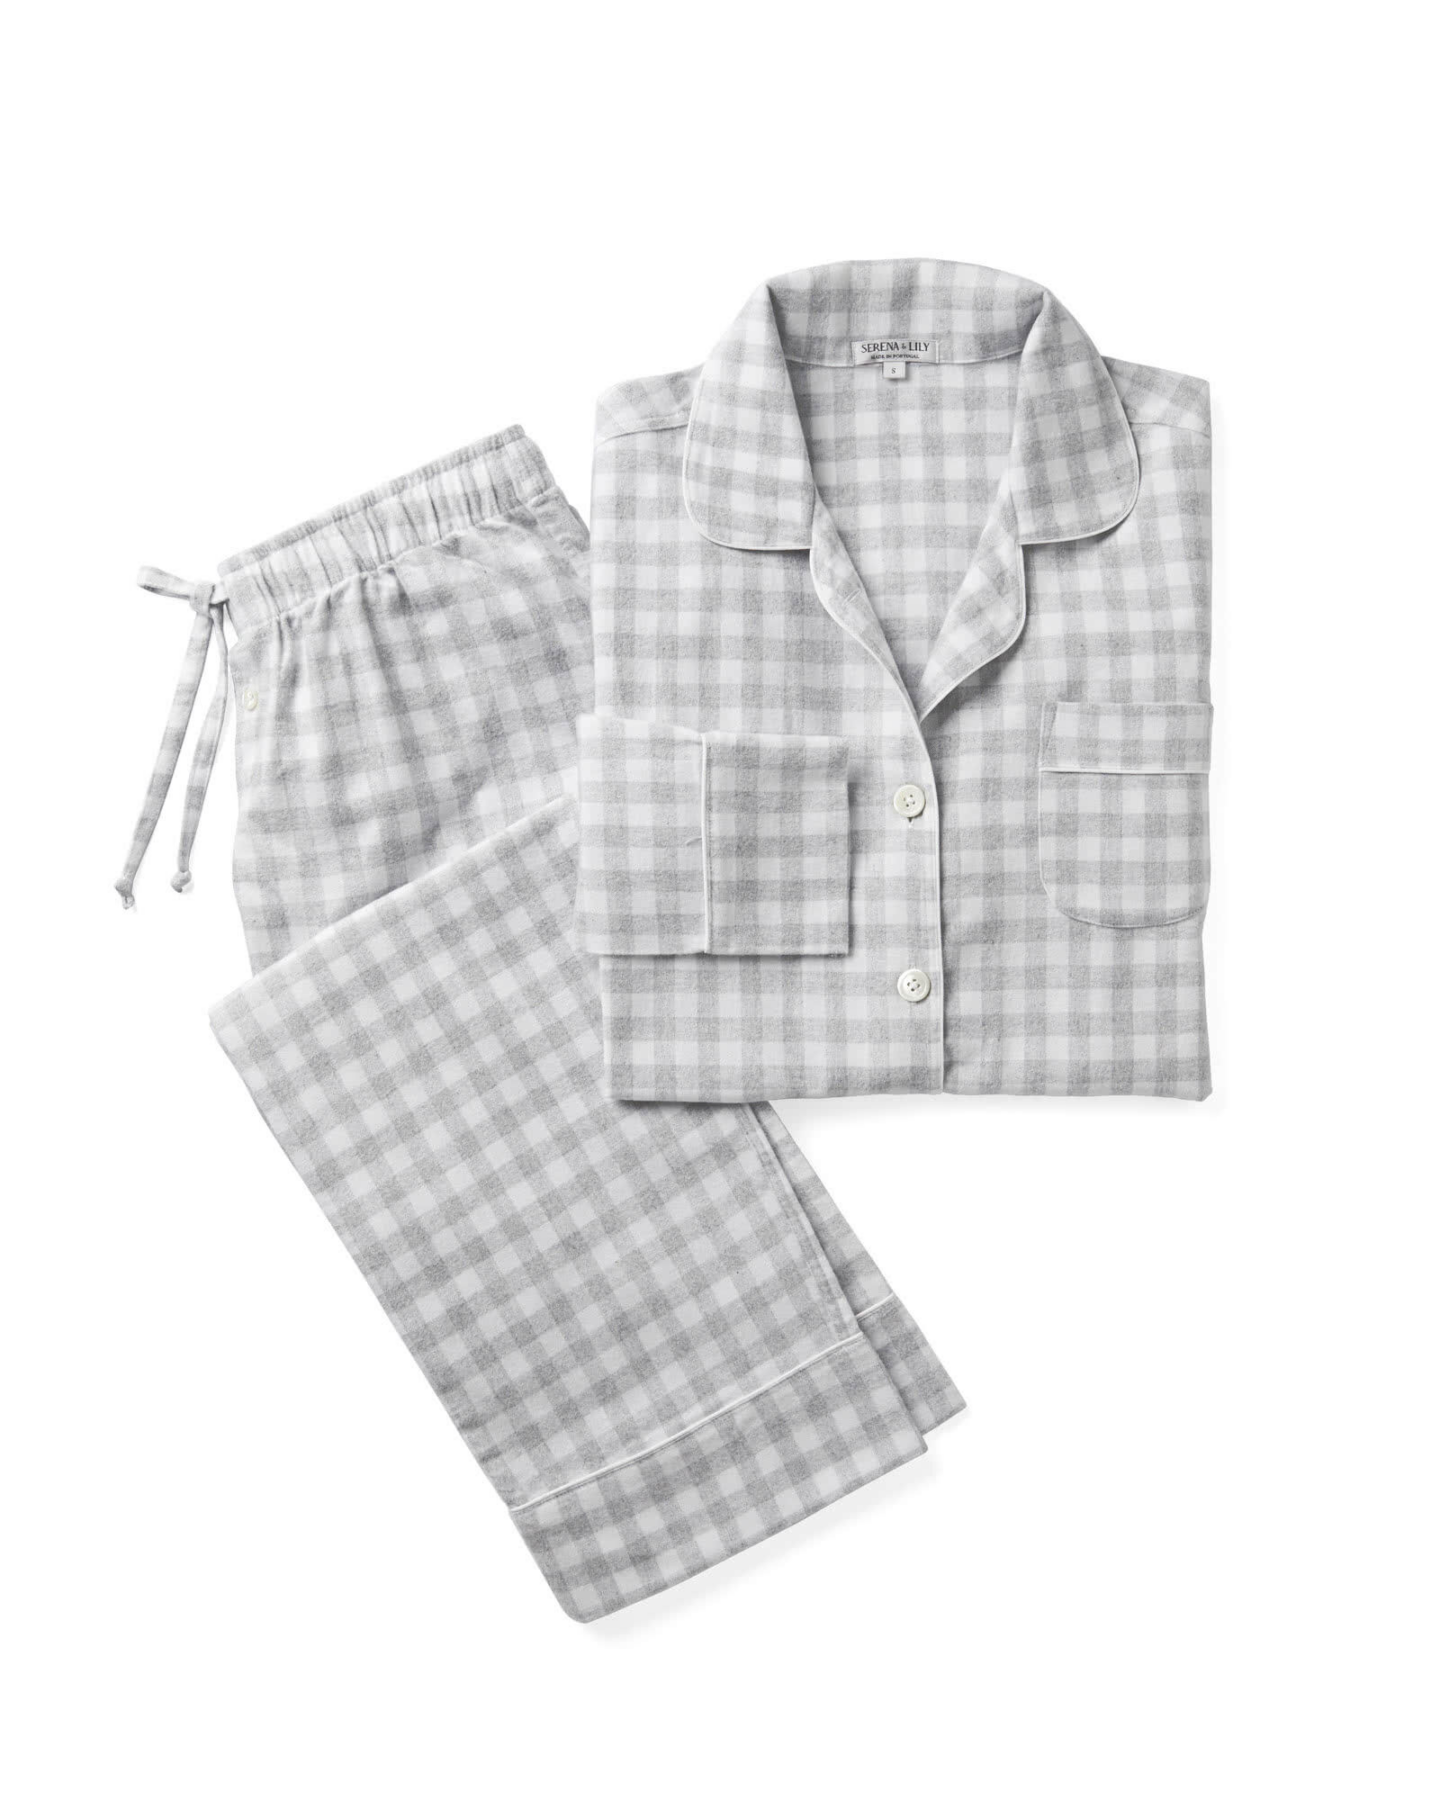 Dalton flannel pajamas (check pattern in color: fog) from Serena & Lily. #flannelpajamas